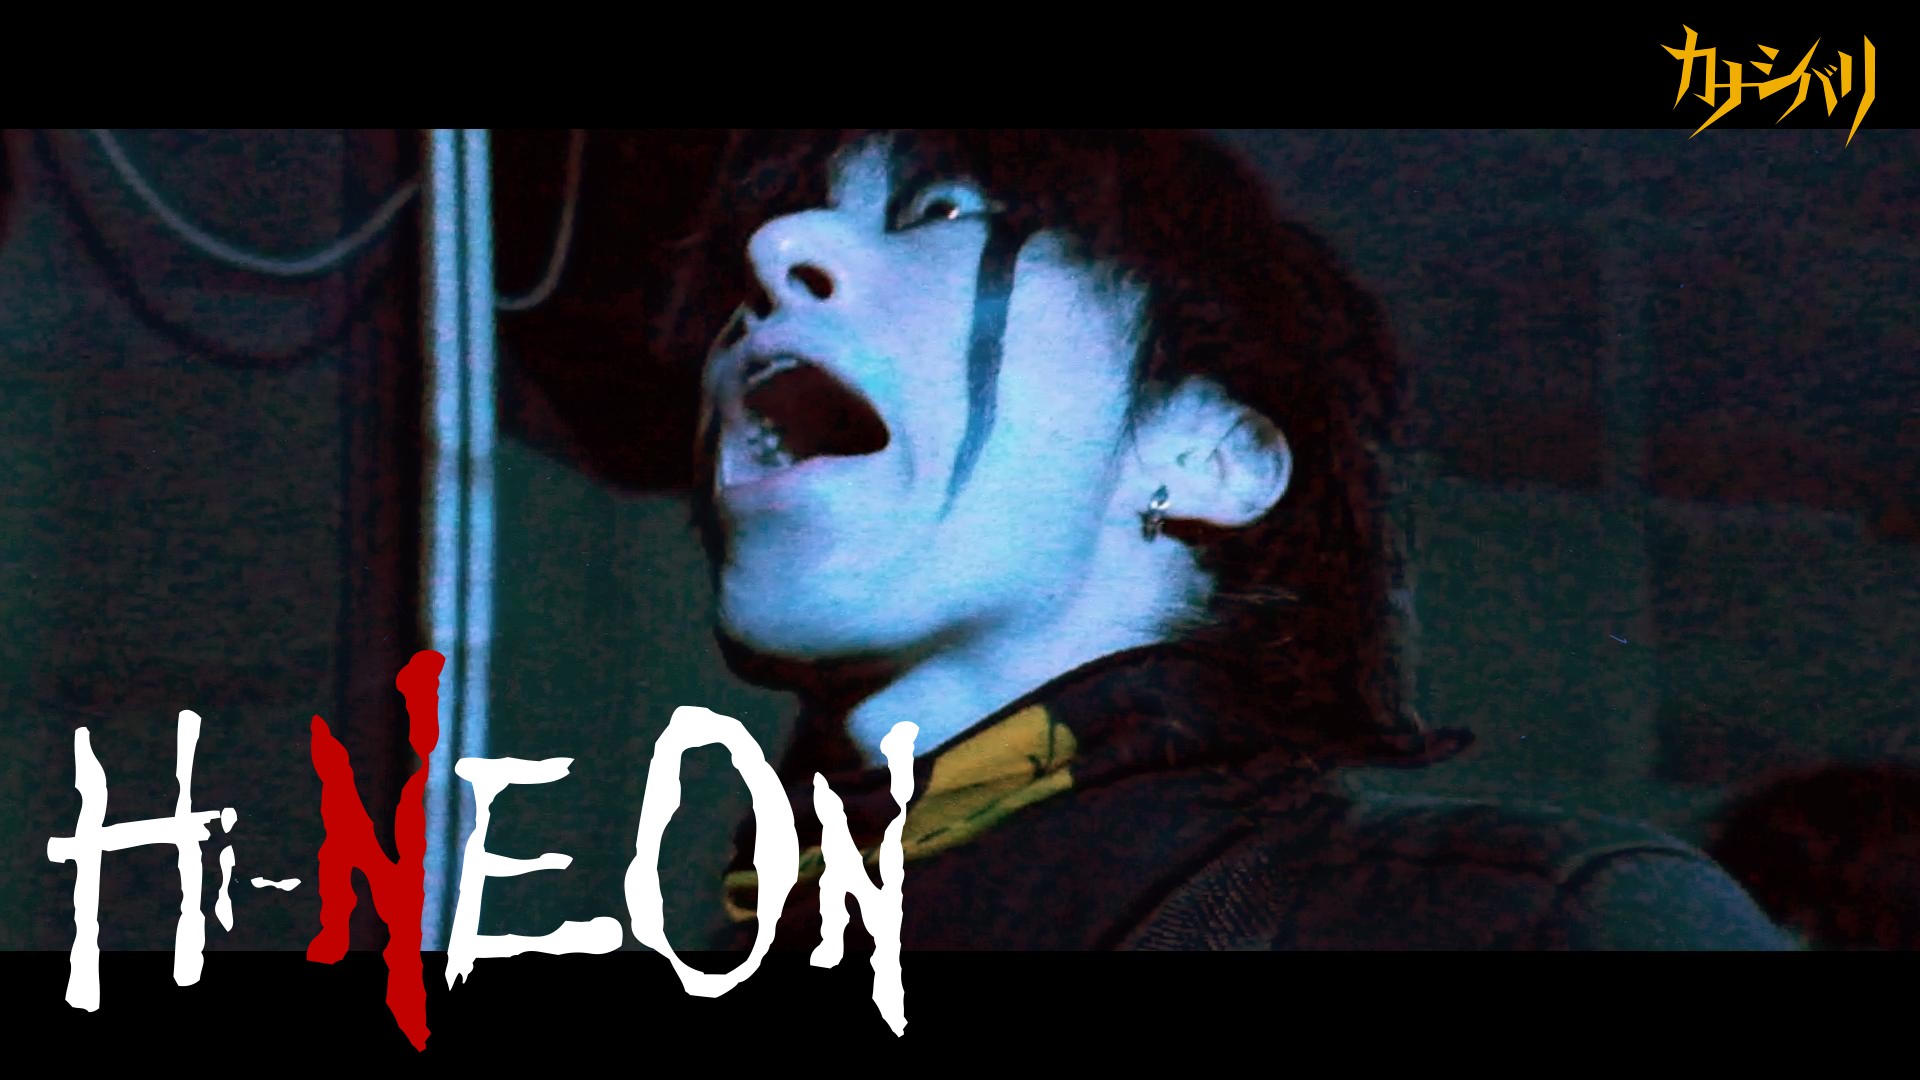 Hi-NEON (OFFICIAL VIDEO)